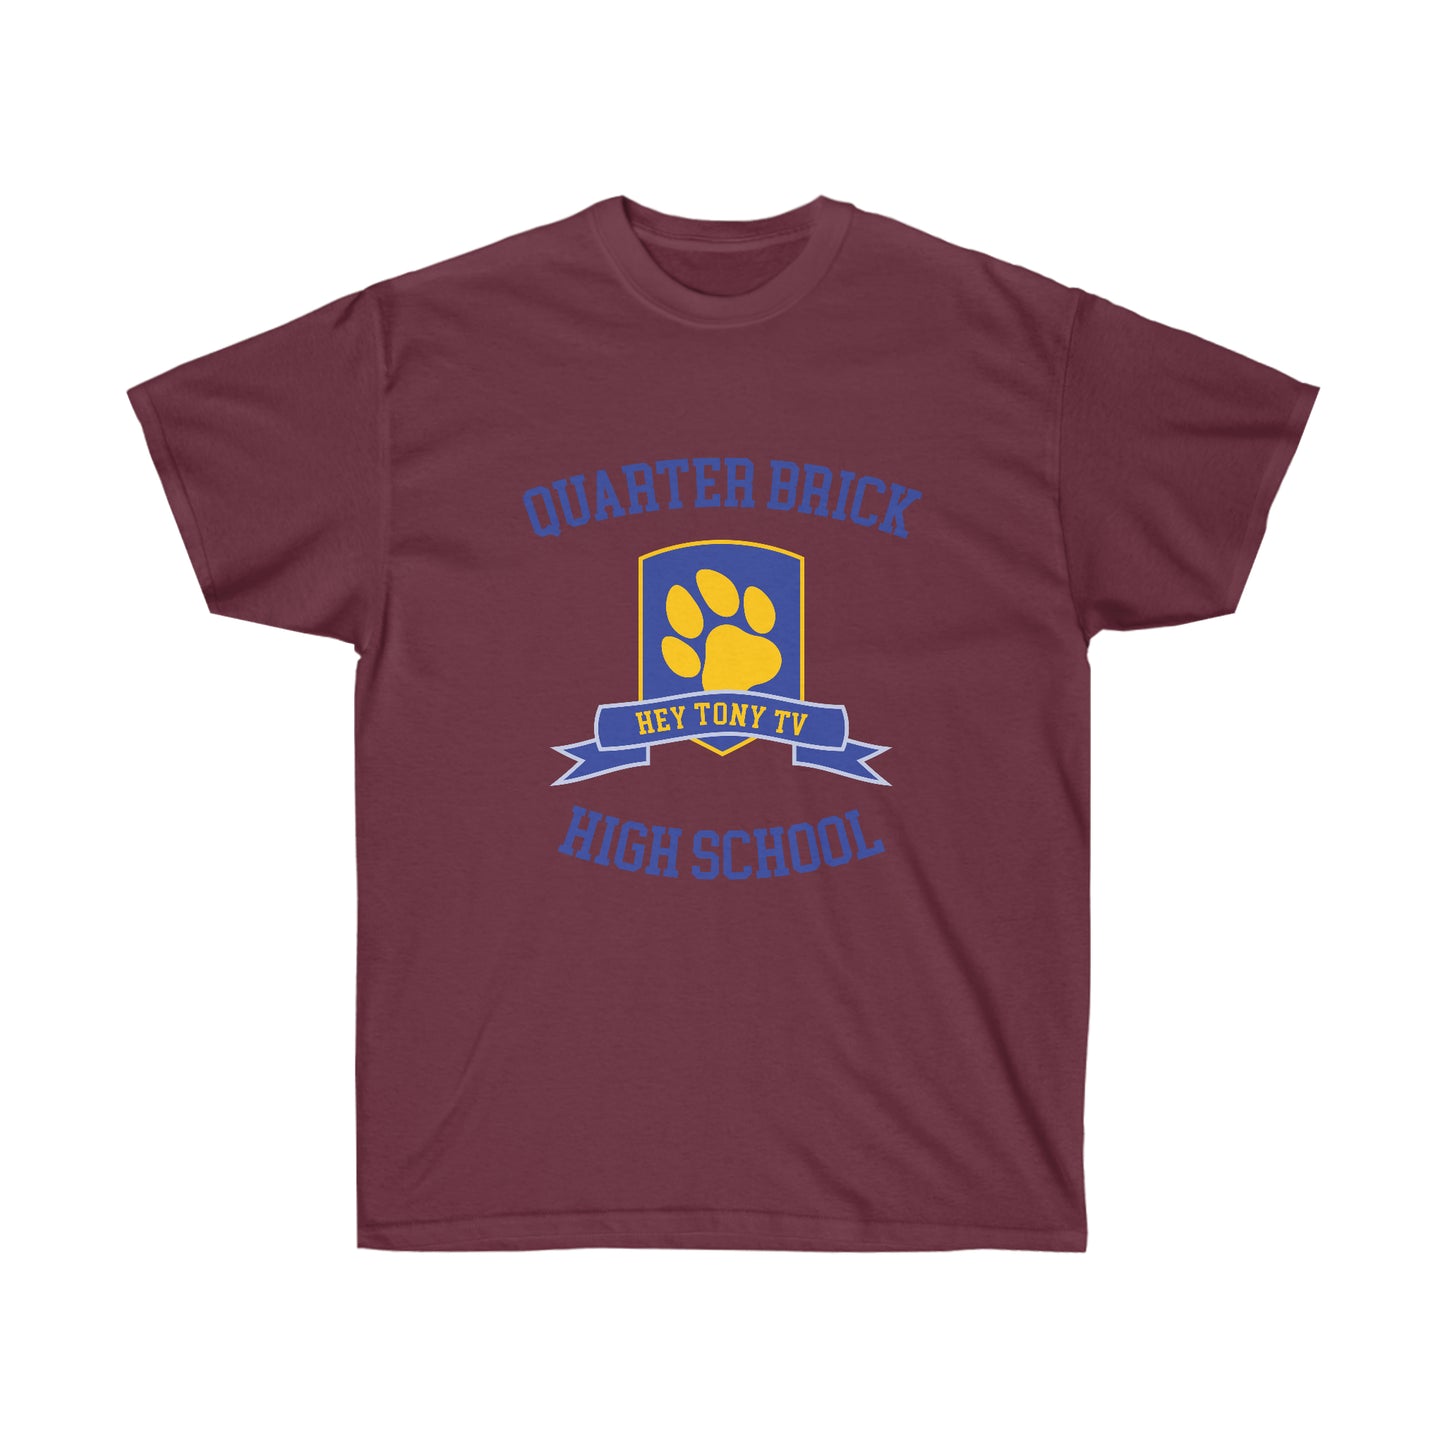 QuarterBrick High Unisex T-Shirt